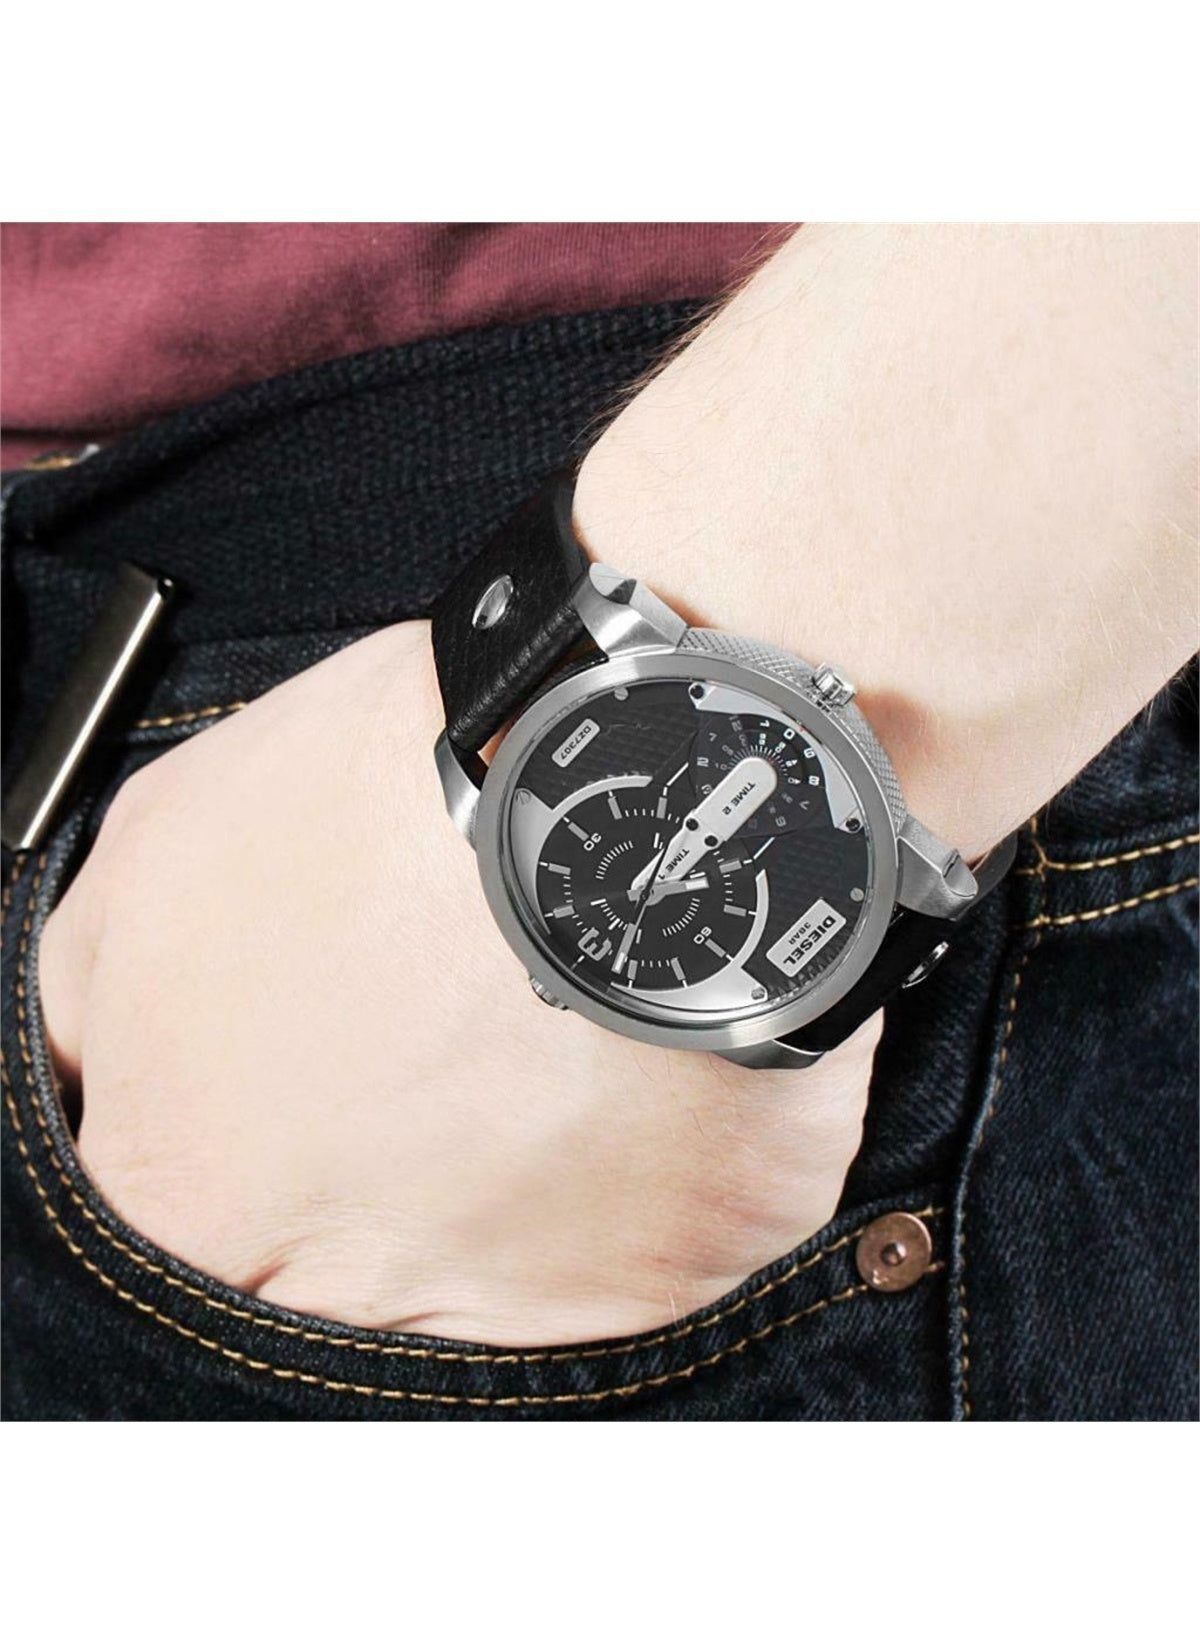 Diesel Mini Daddy Black Dial Black Leather Strap Watch For Men - DZ7307